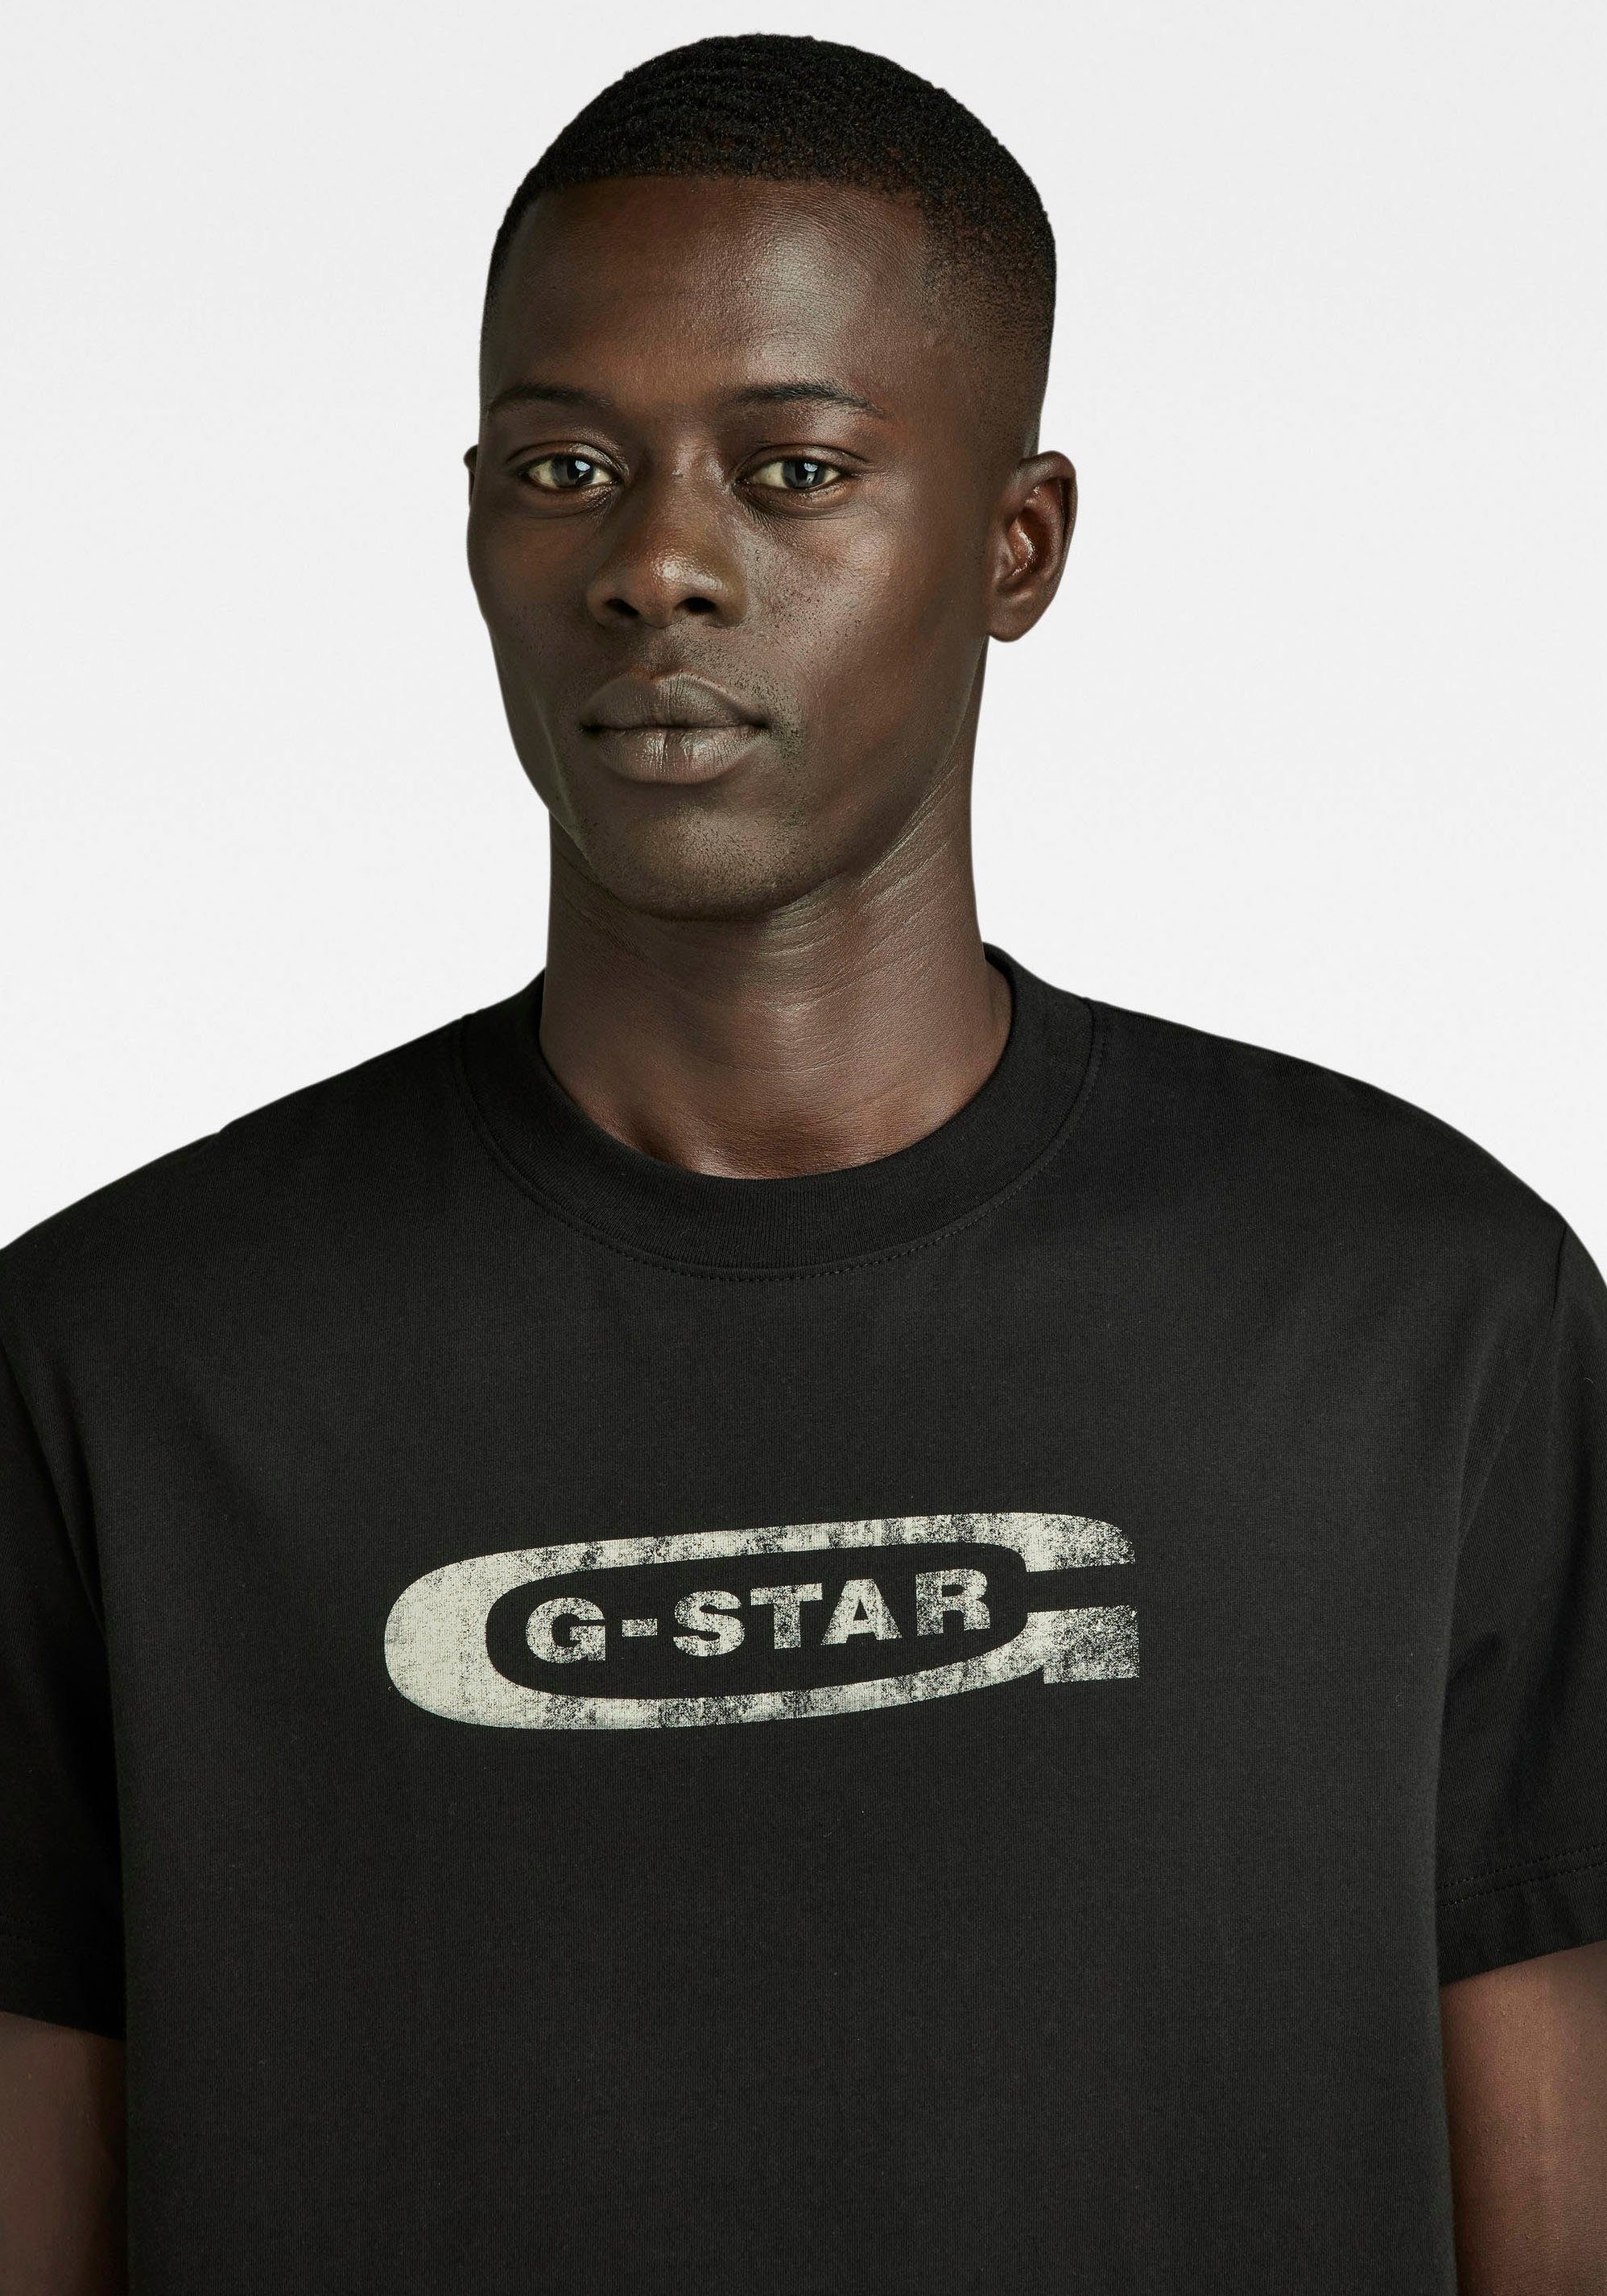 G-Star RAW T-shirt Distressed old school logo